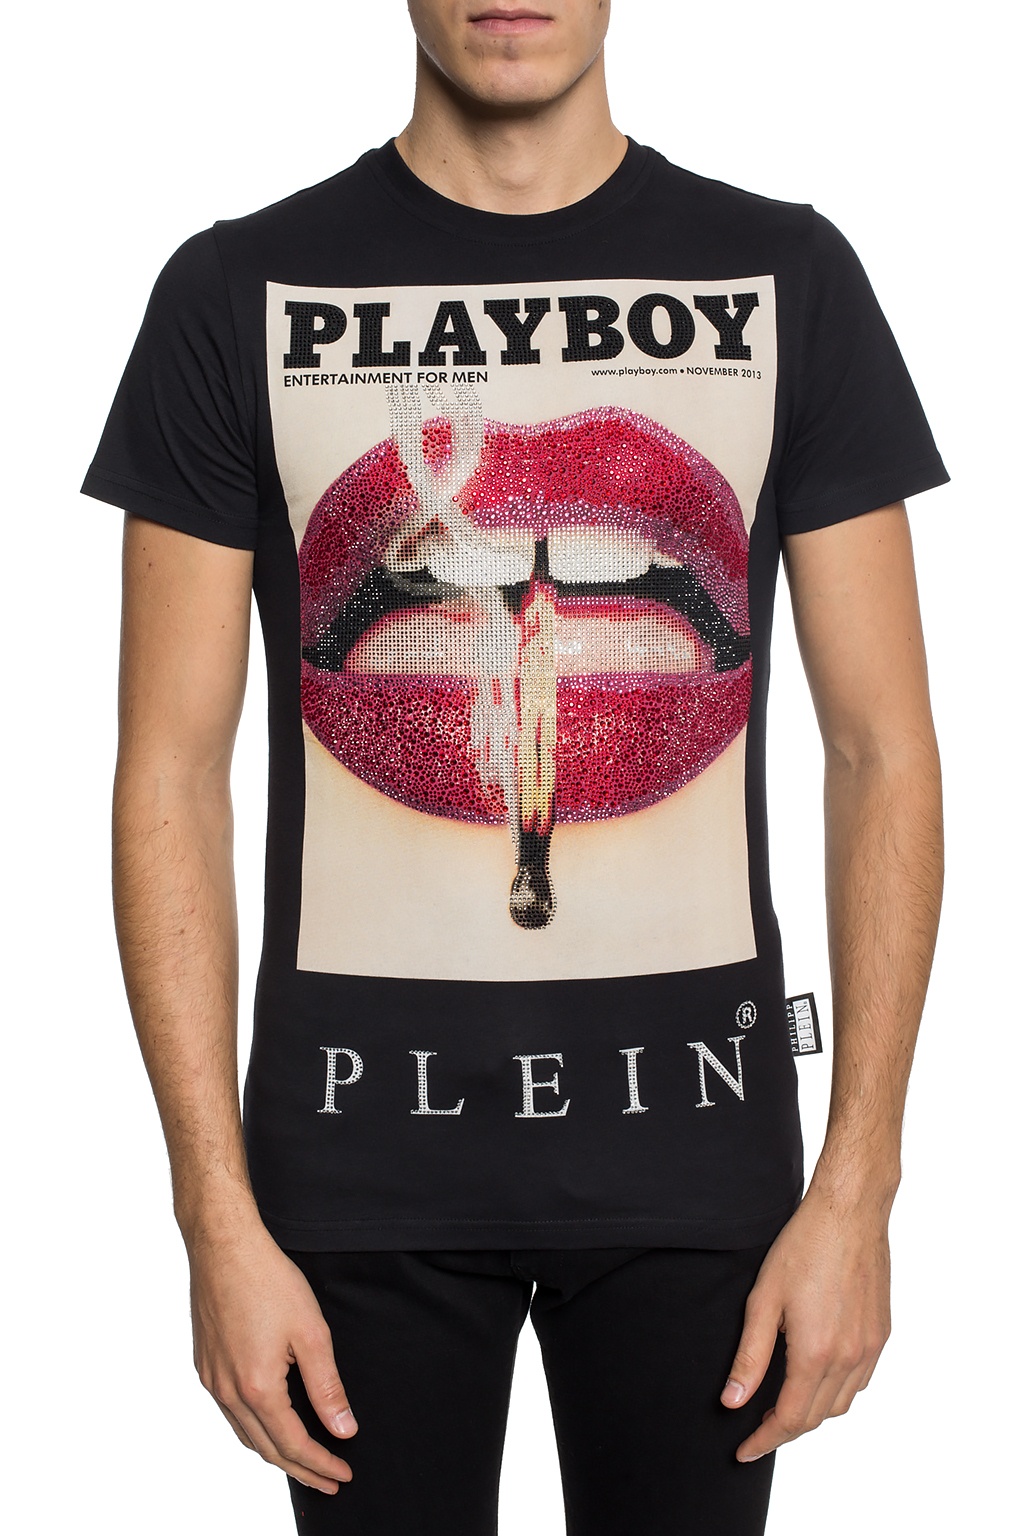 playboy philipp plein t shirt